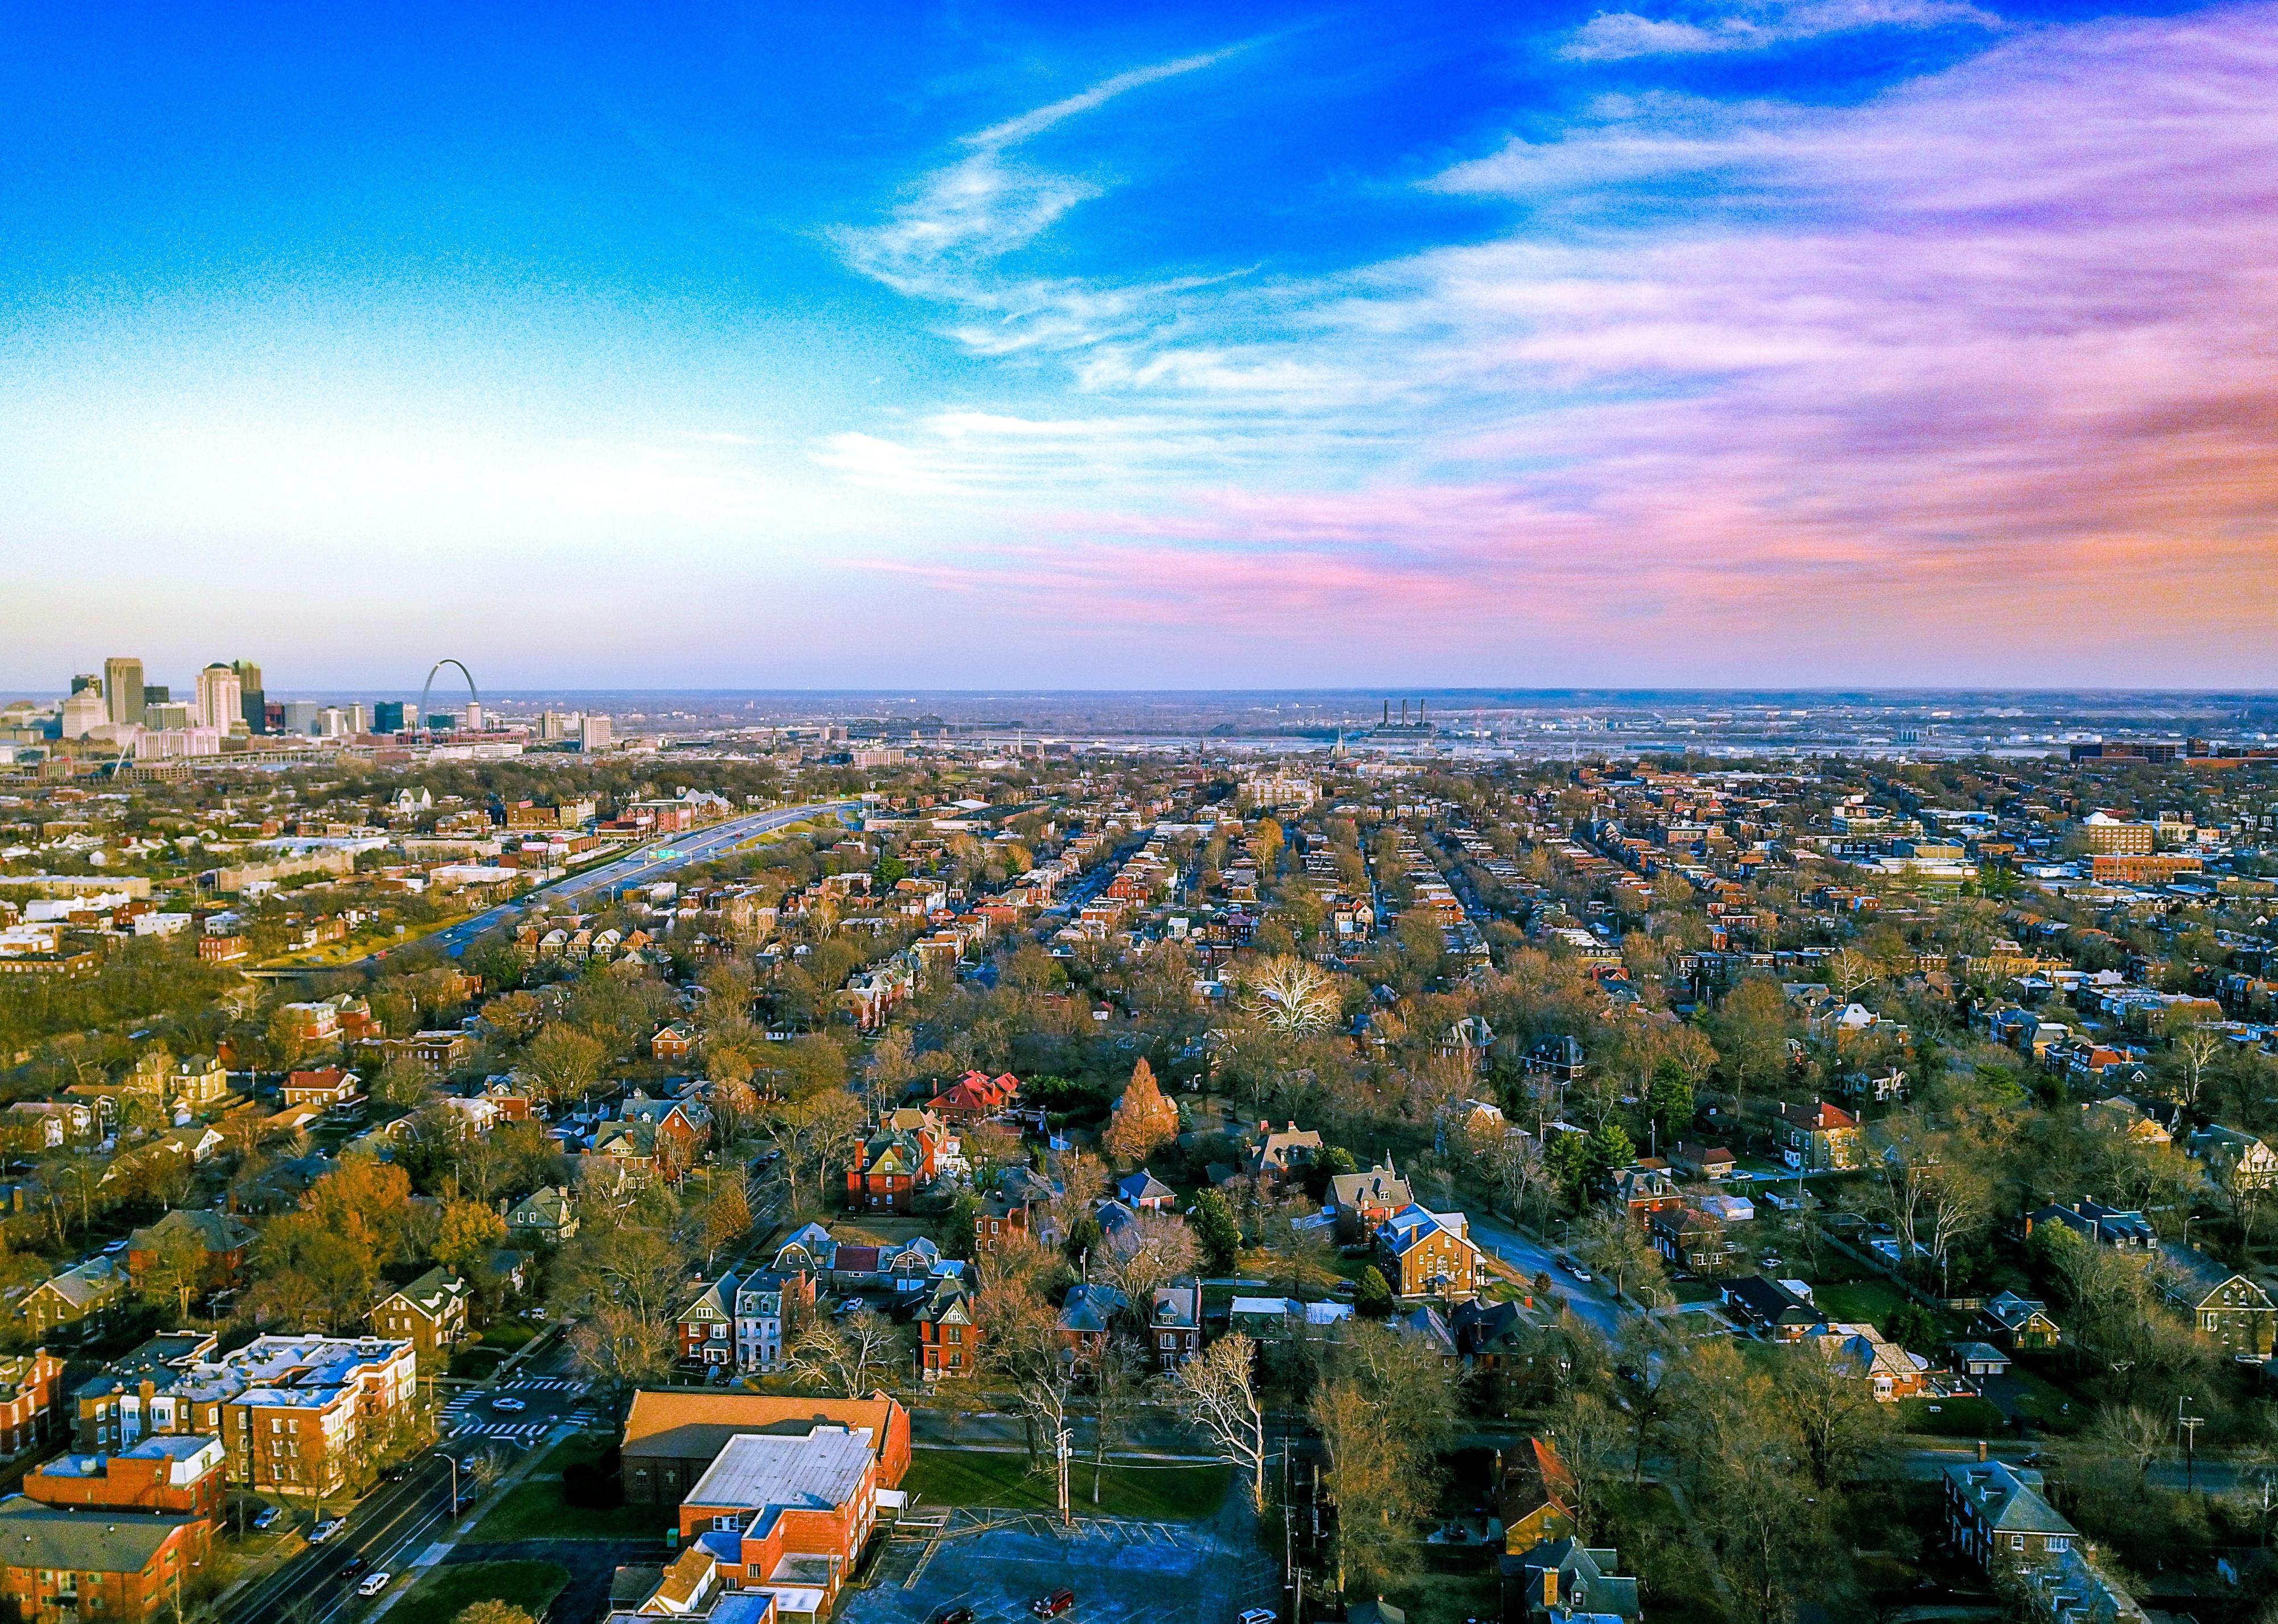 Aerial view of Saint Louis suburb community.